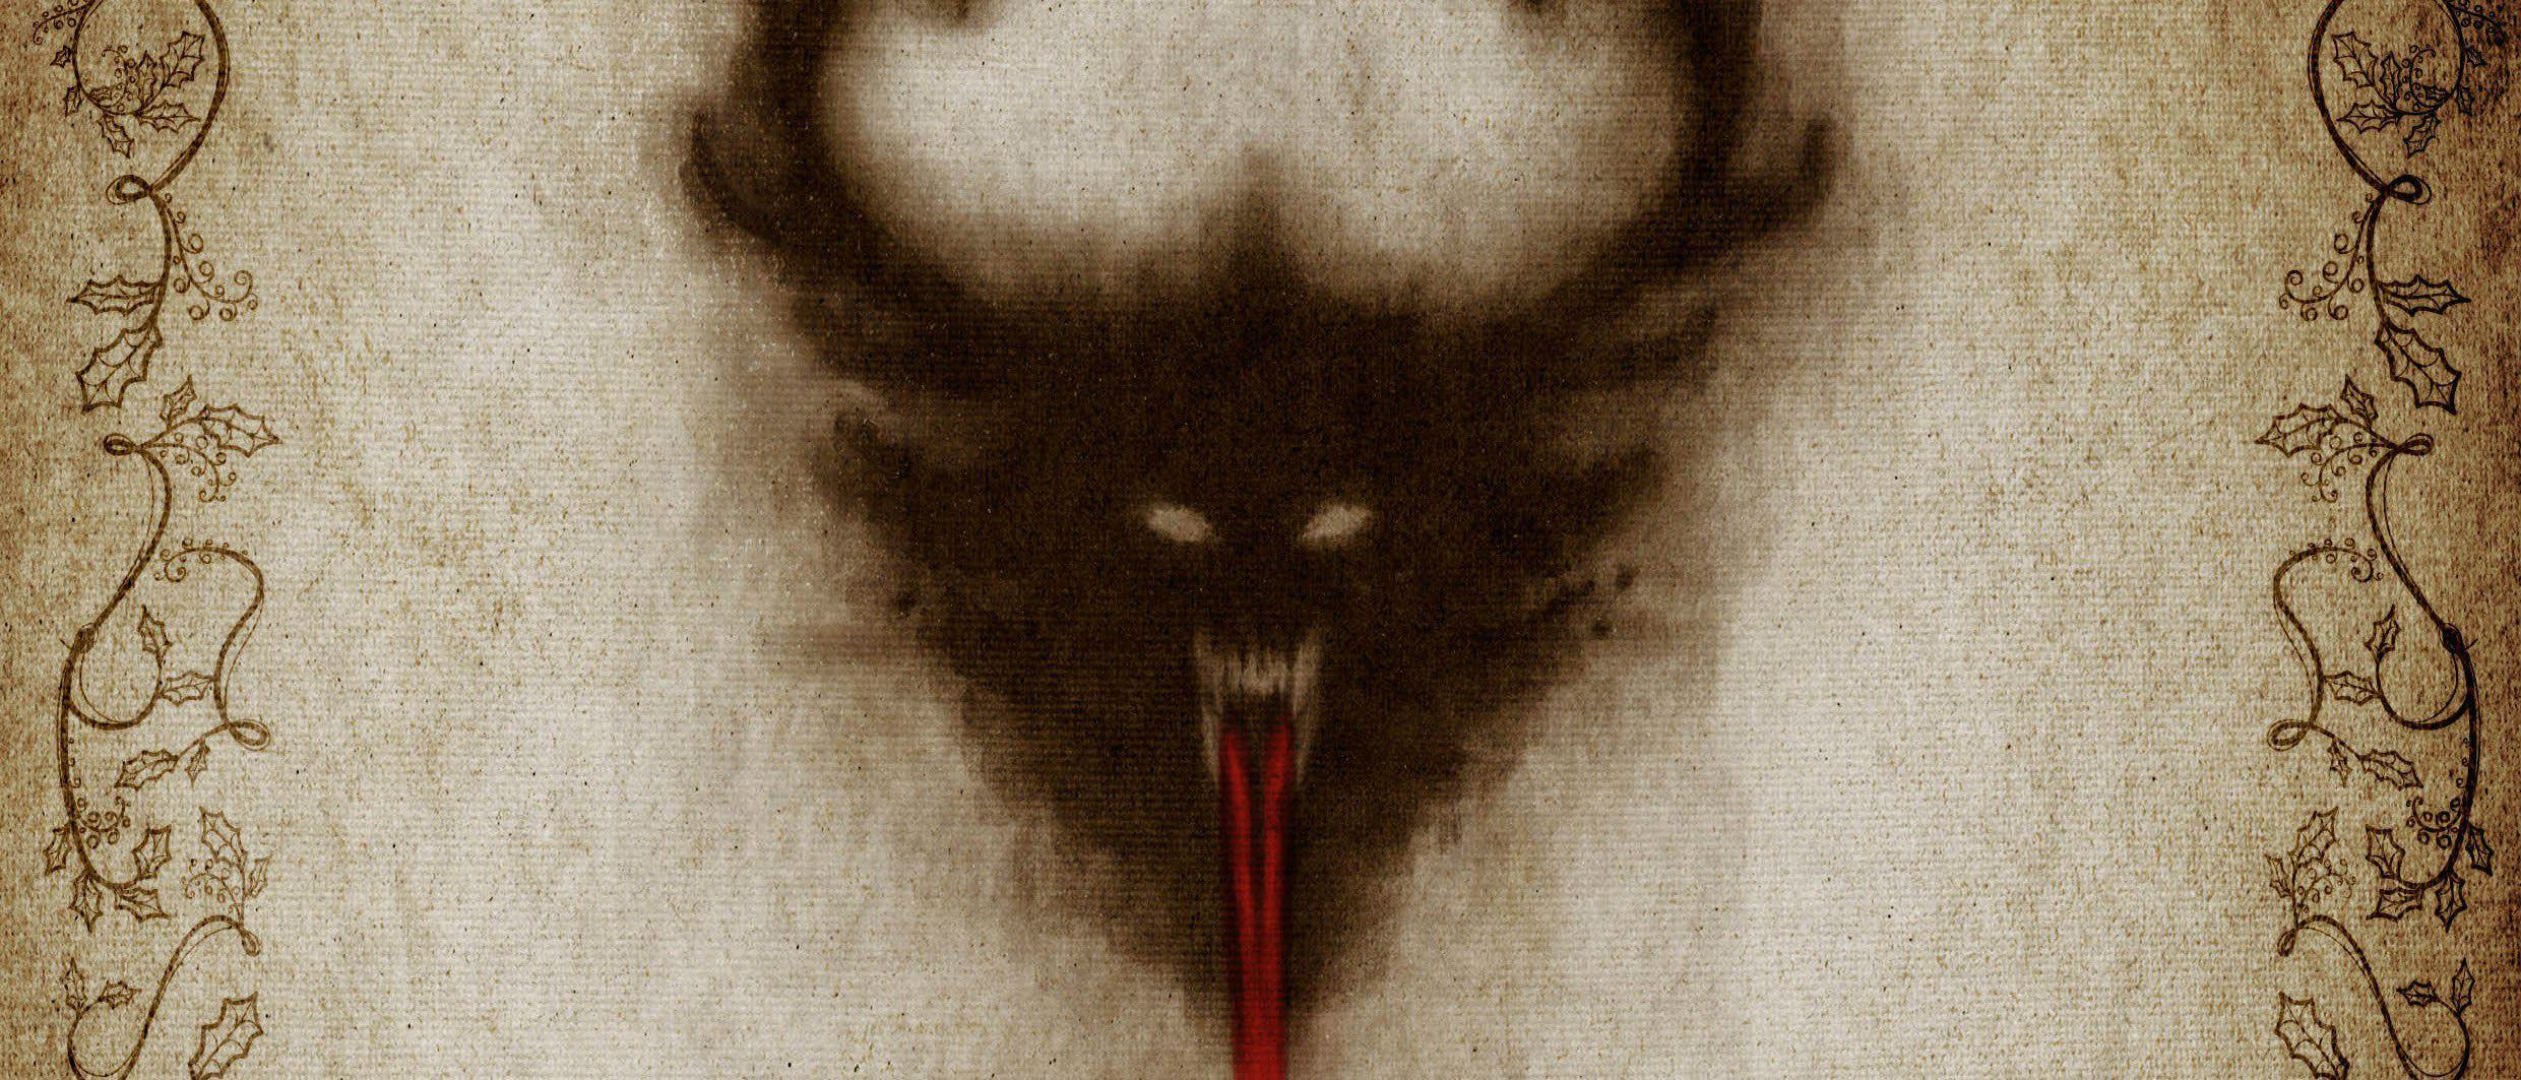 2521x1080 Krampus Monster Demon Evil Horror Dark Occult Christmas Story Wallpaper At  Dark Wallpapers